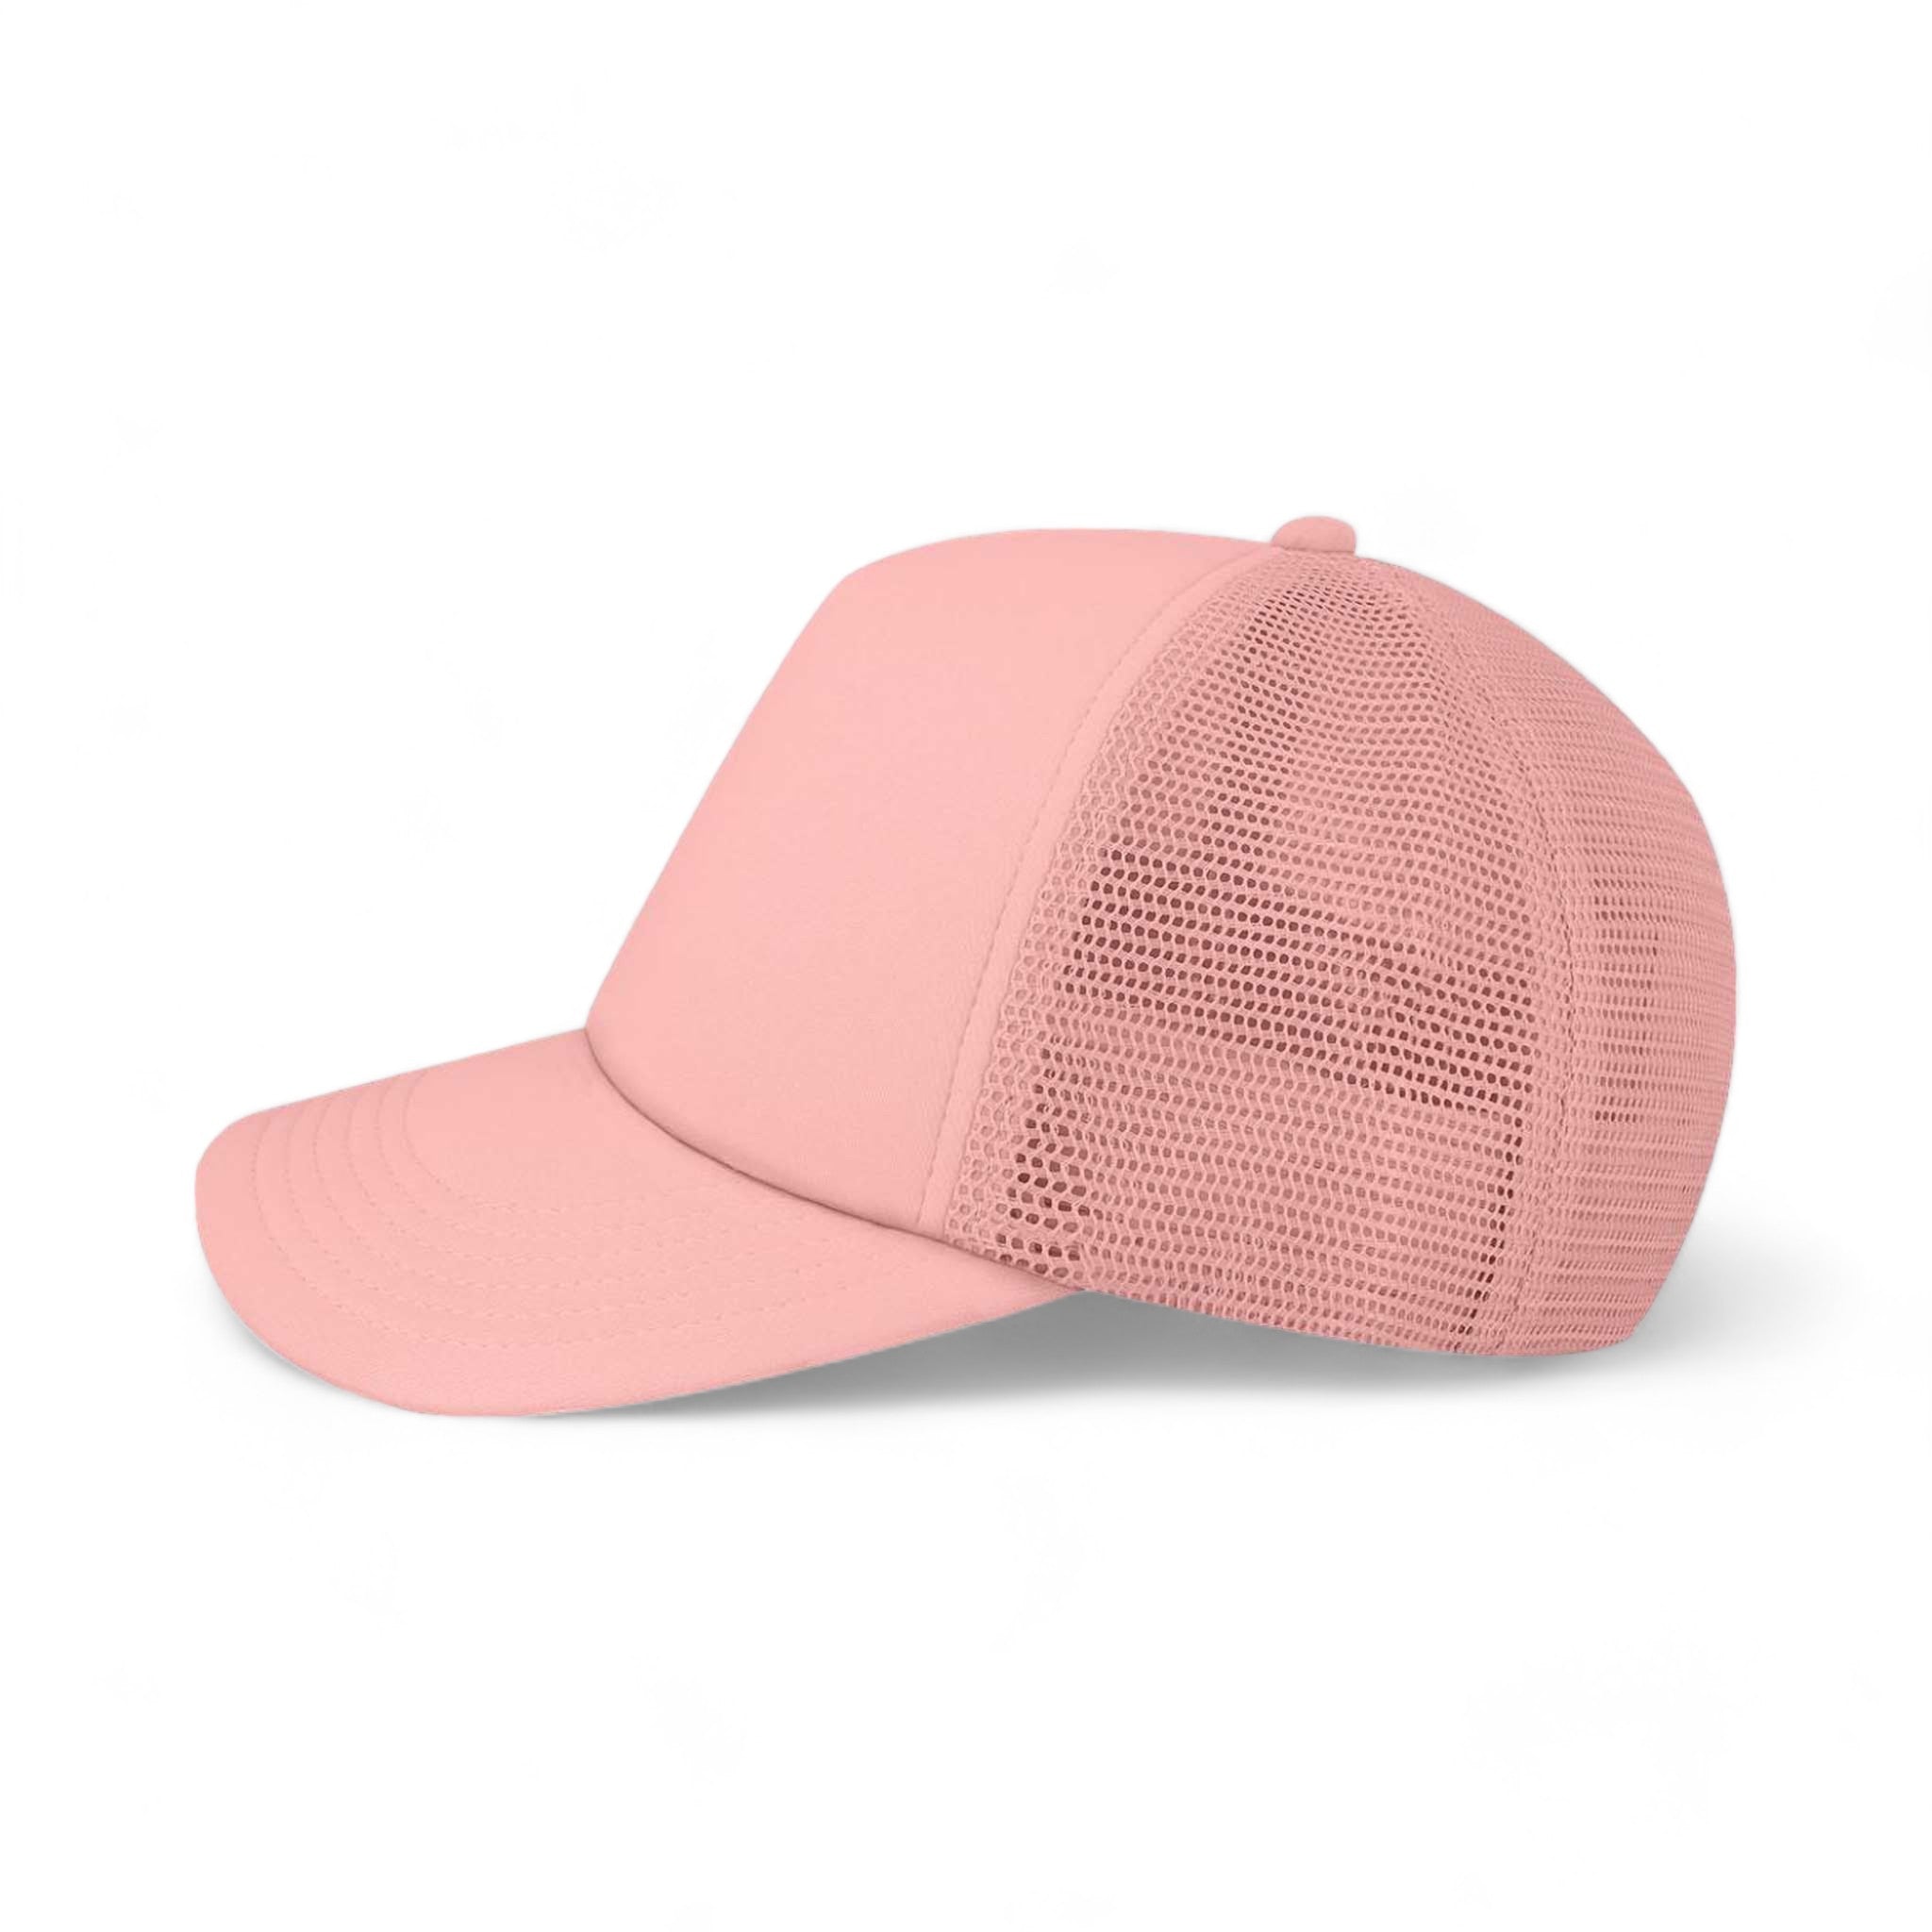 Side view of LEGACY LTA custom hat in dusty rose